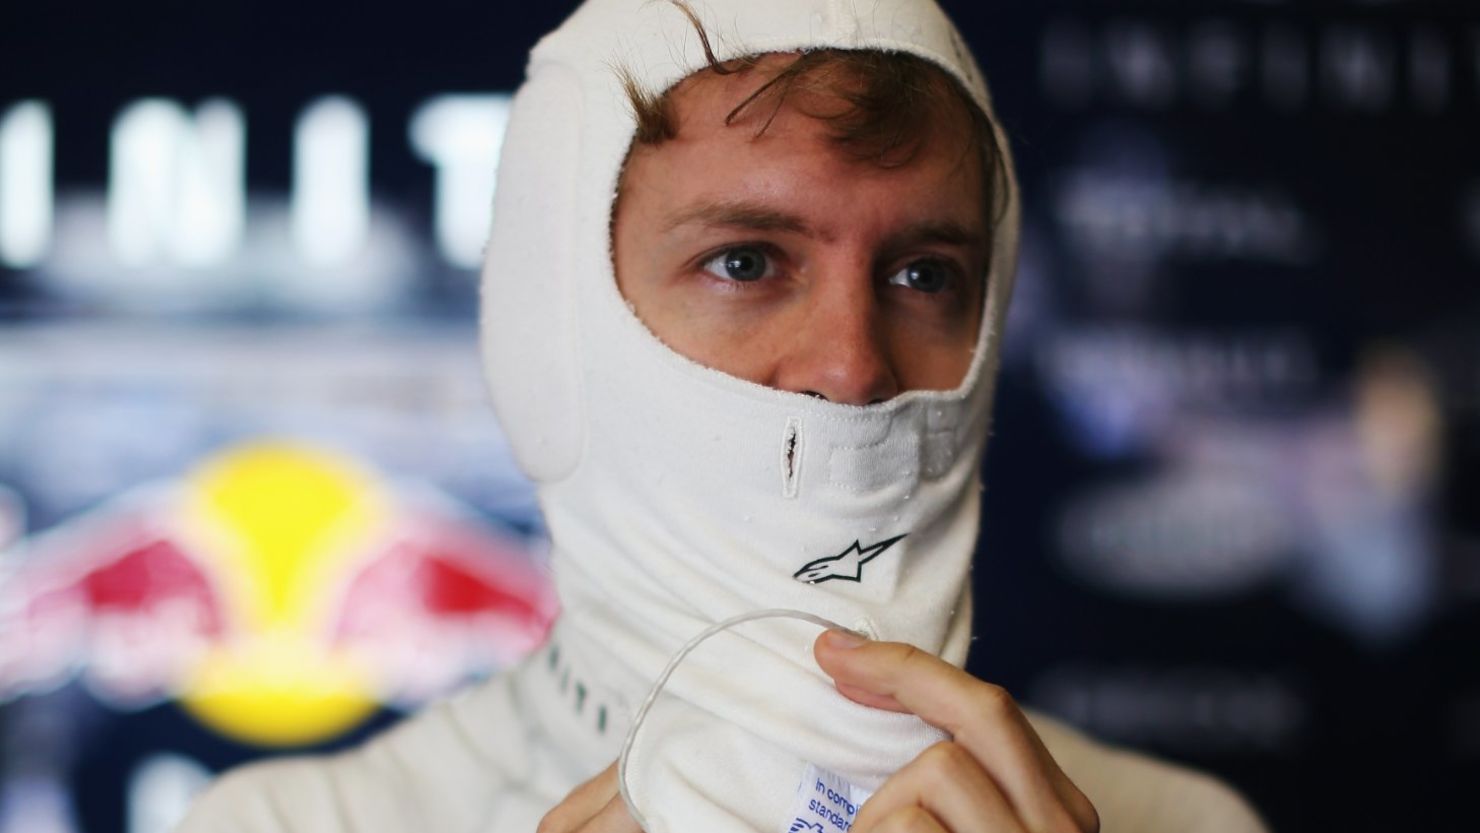 Red Bull's Sebastian Vettel has won the world championship in each of the last three seasons.